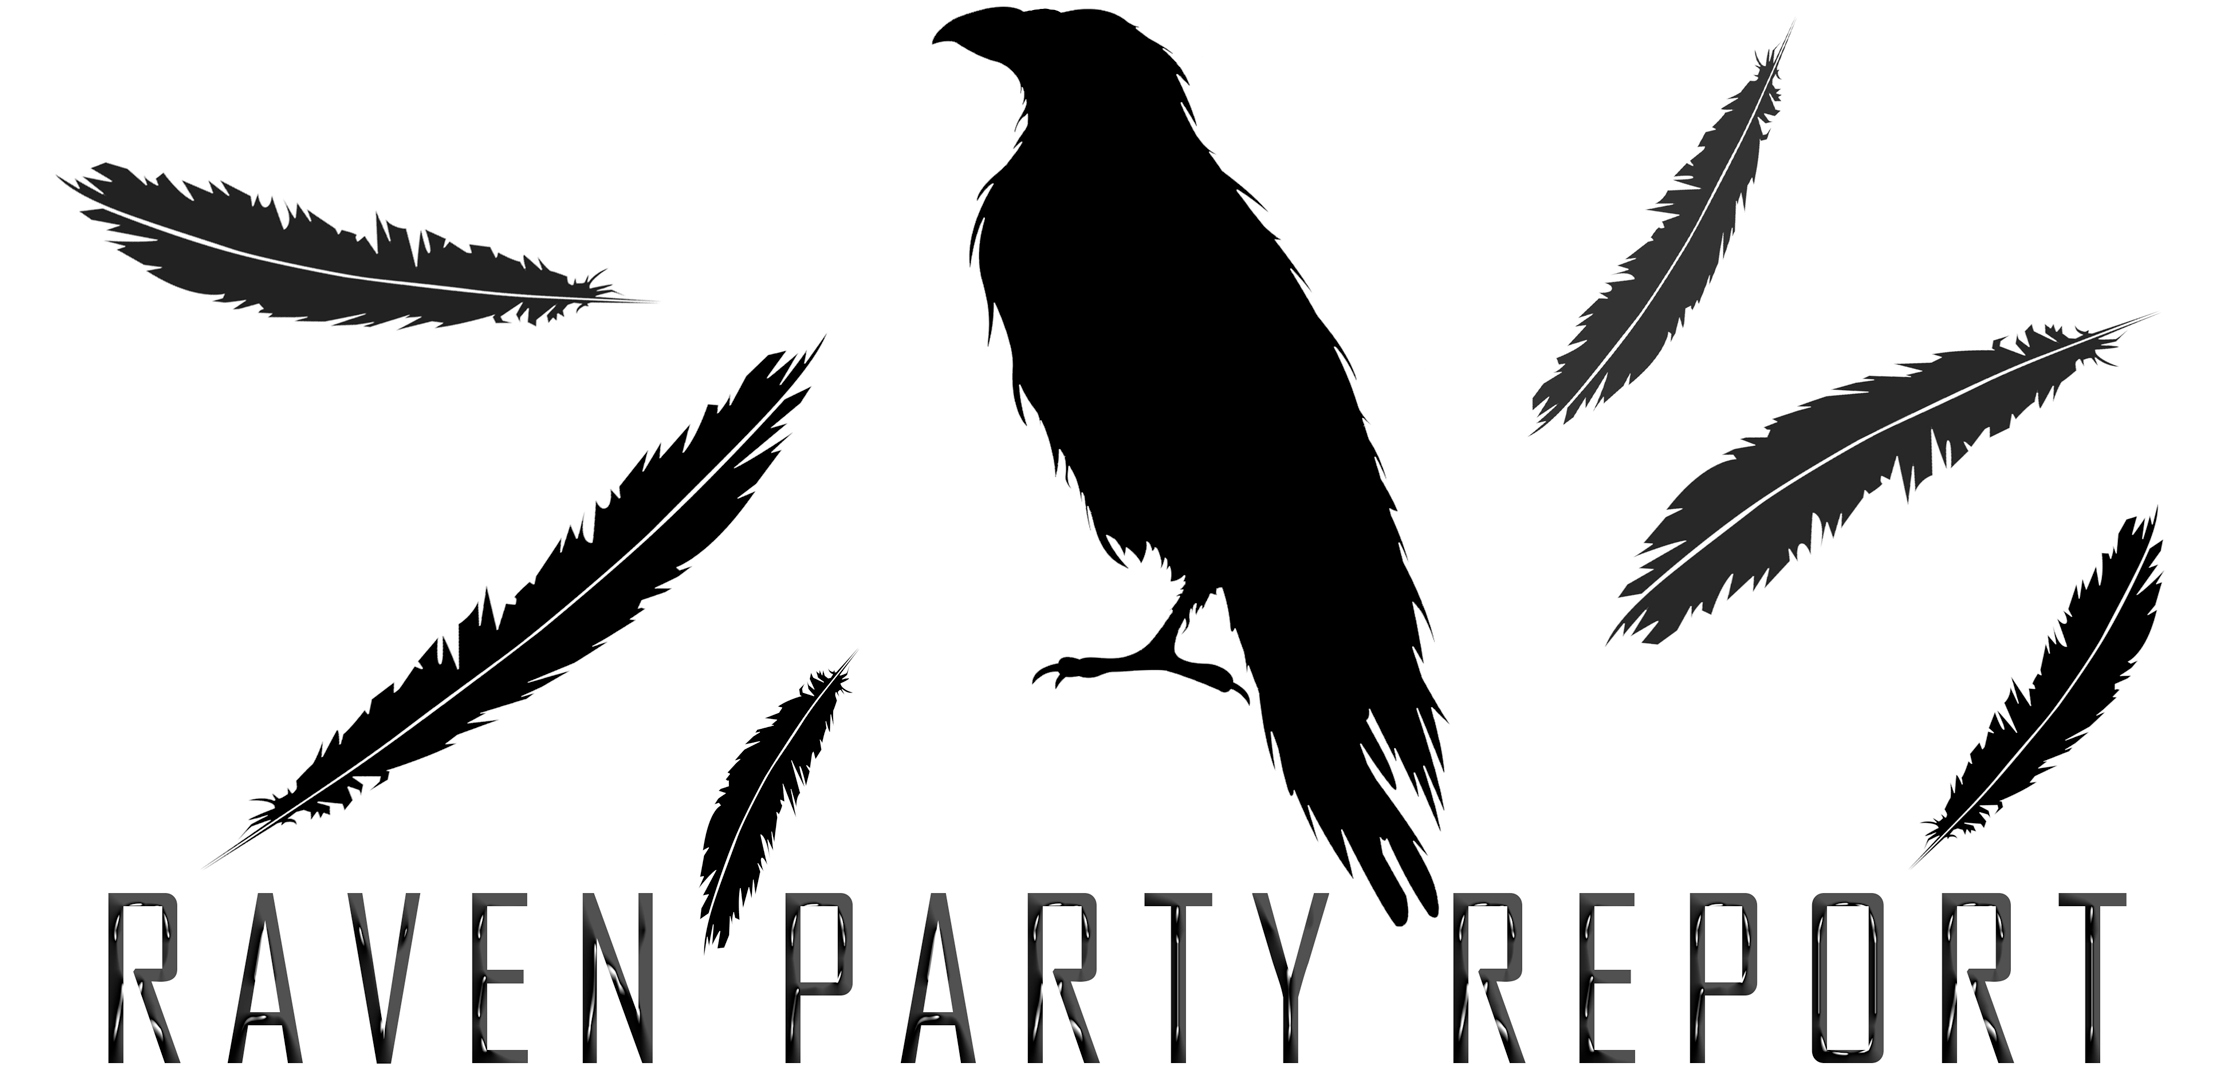 ravenparty-report-las-vegas-false-flag.png